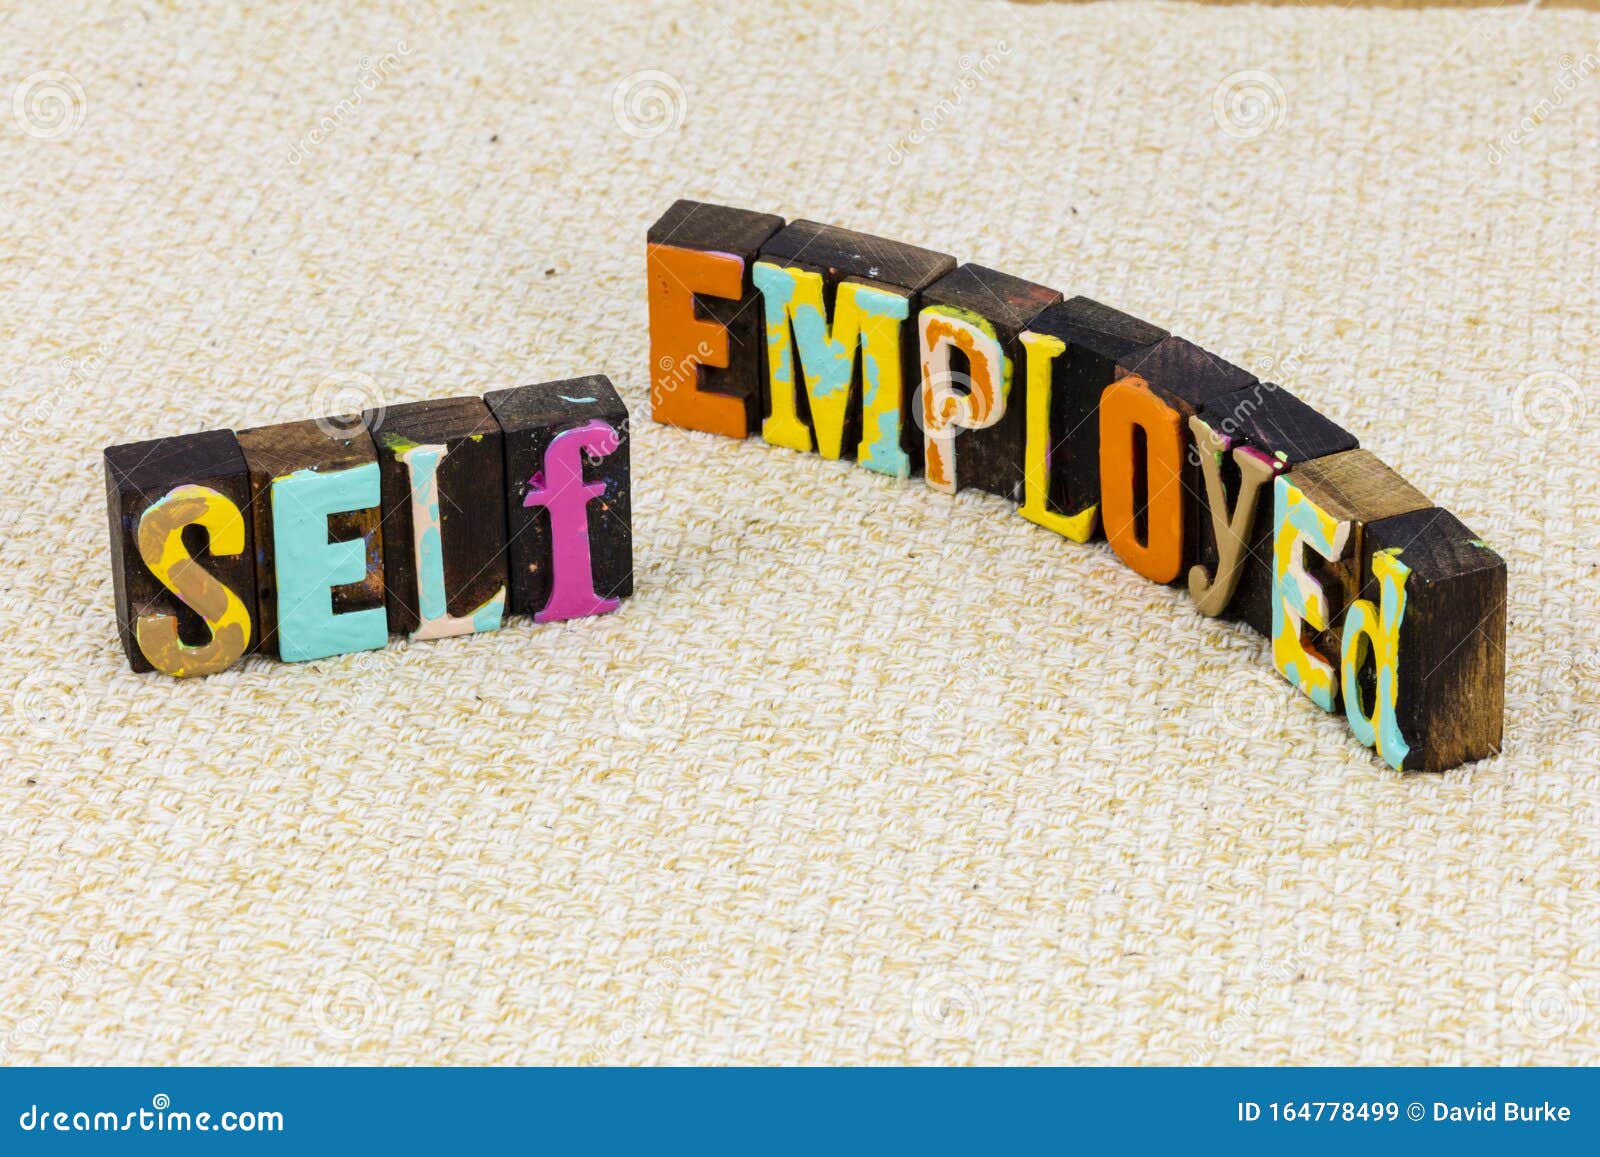 self employed employment job business career work owner